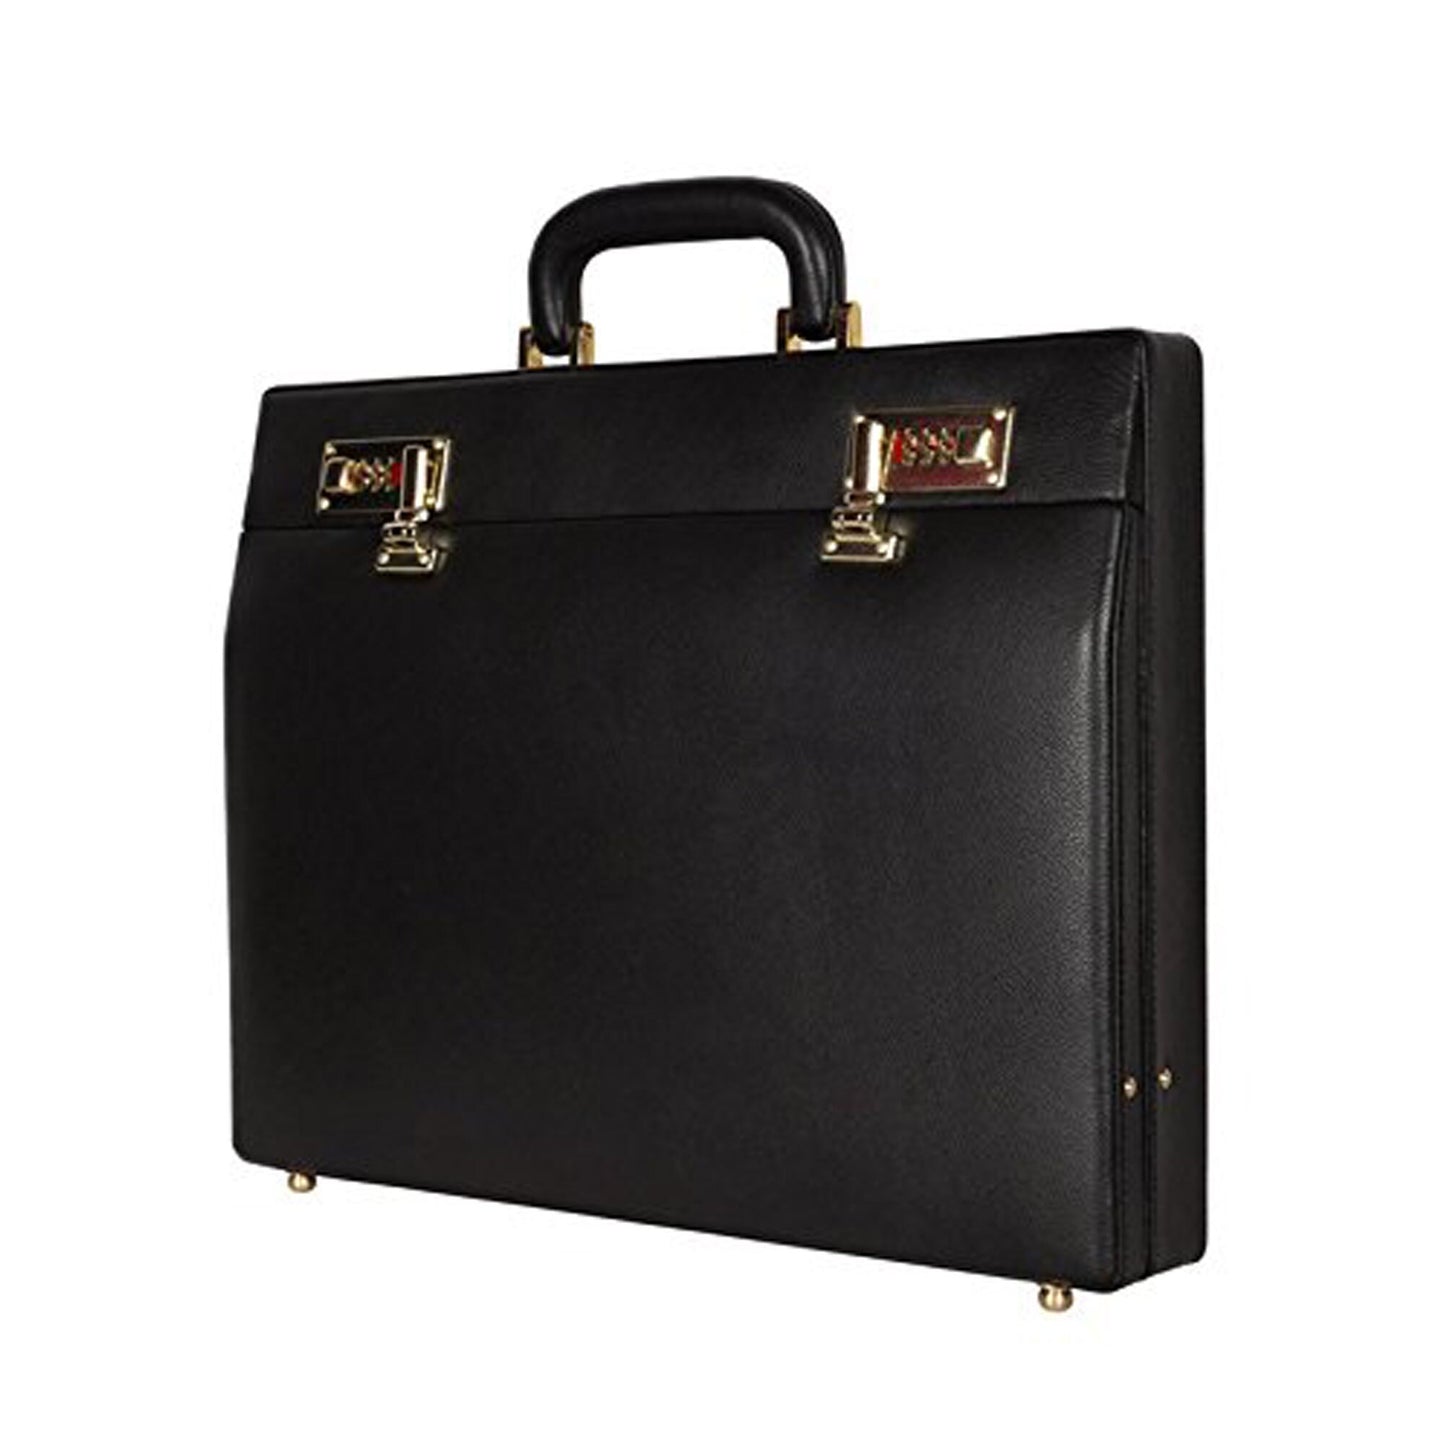 Genuine Leather Attache Briefcase for Men's Leather Executive Handbag 14 inch Laptop Bag MacBook Carry Case Documents Organizer (Black)